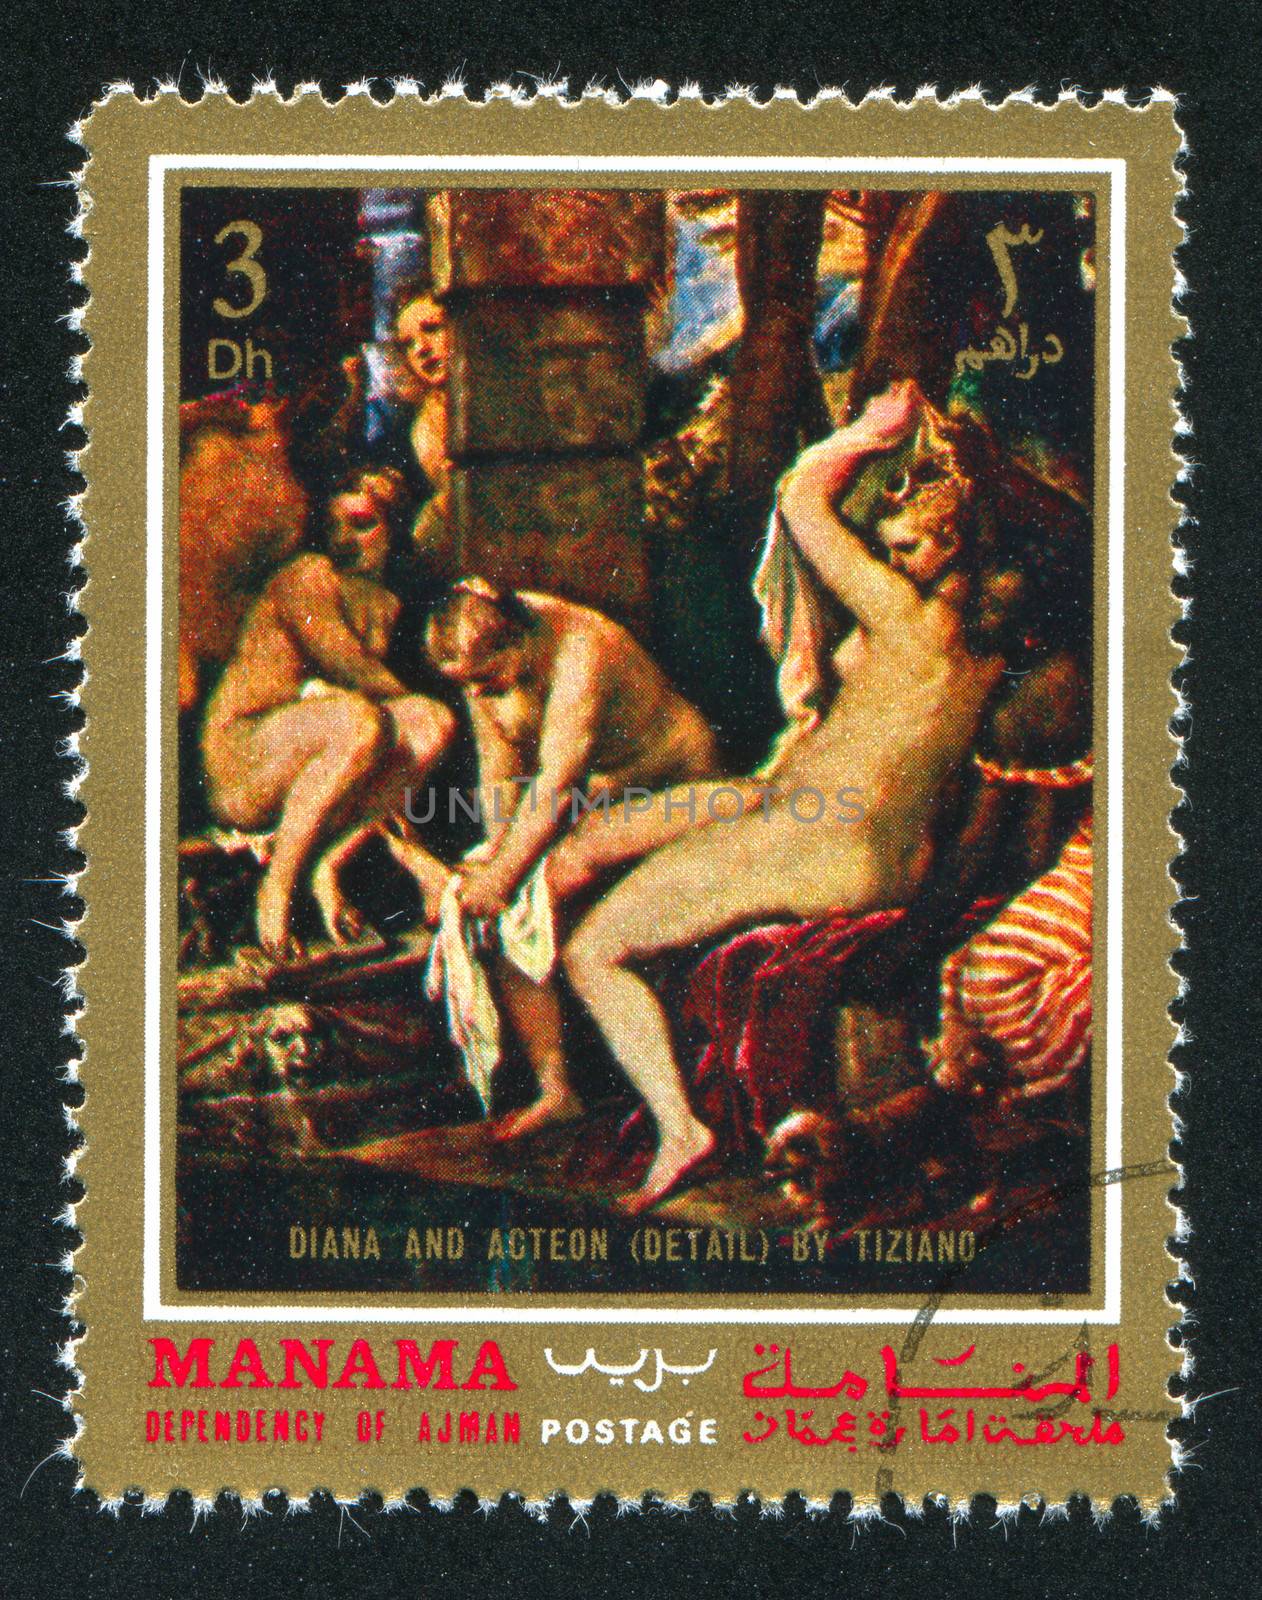 MANAMA - CIRCA 1971: stamp printed by Manama, shows Diana and Acteon by Tiziano, circa 1971